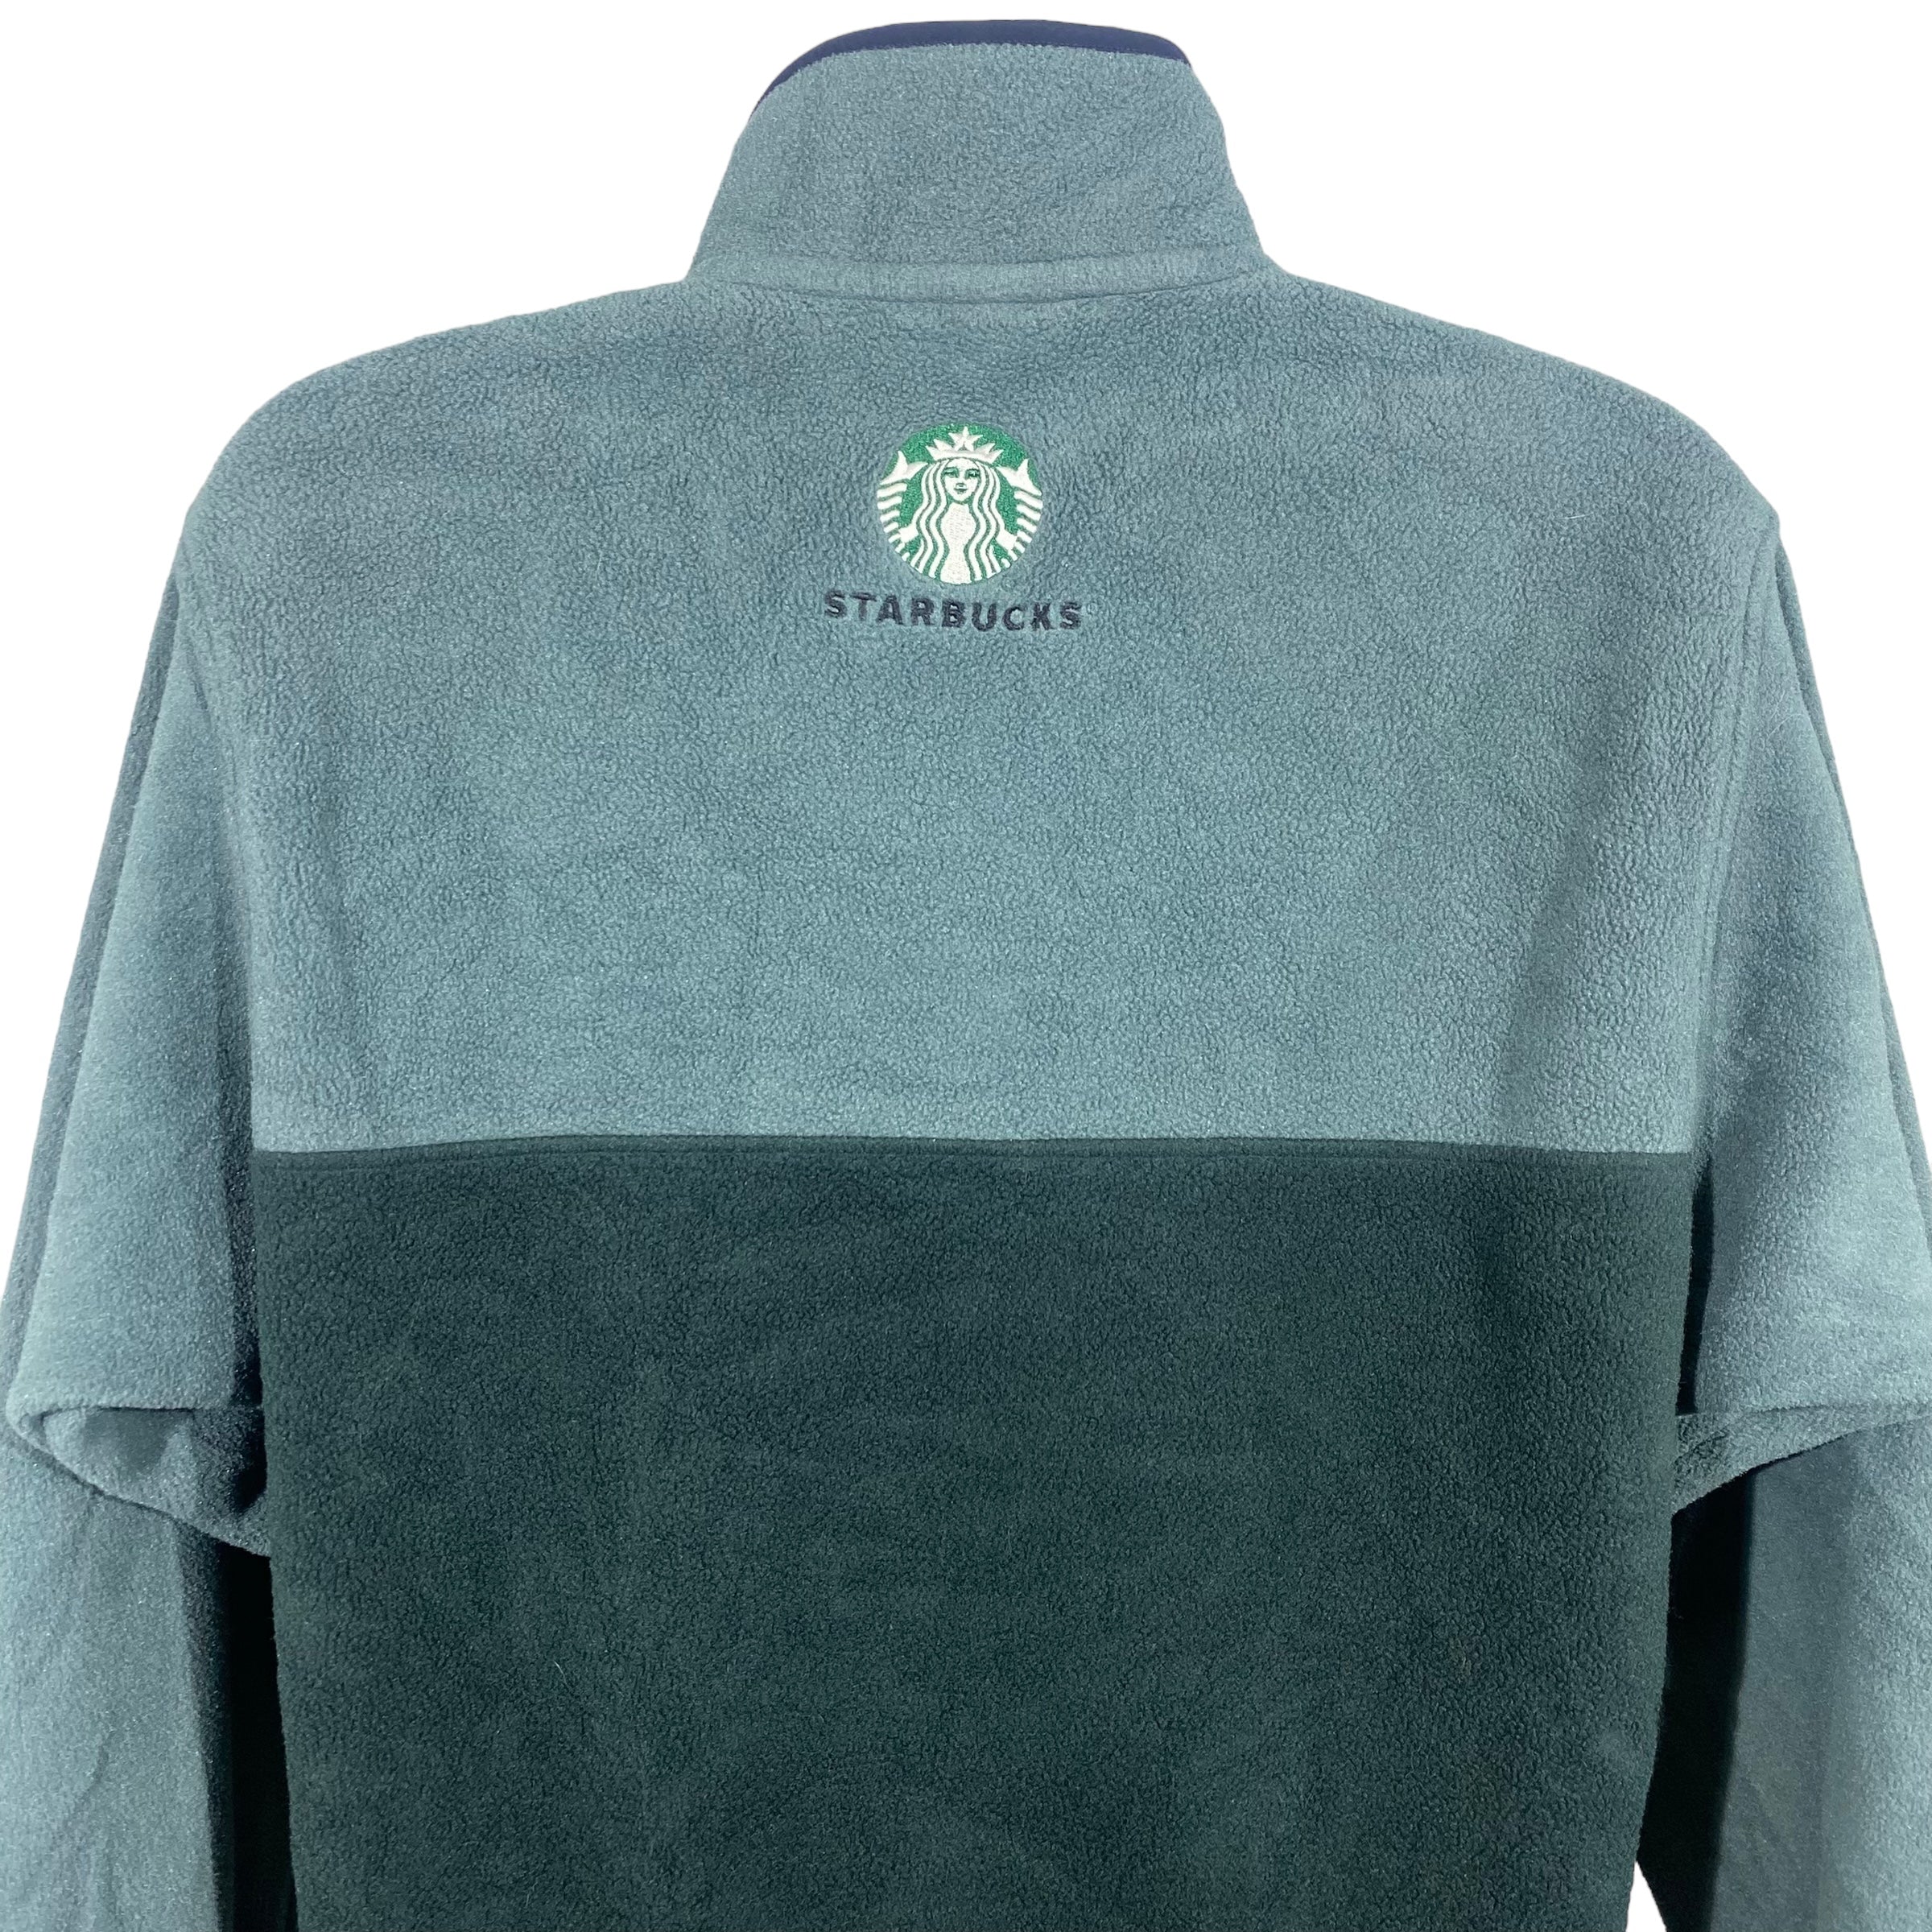 Patagonia Starbucks Color Block Fleece 2000's